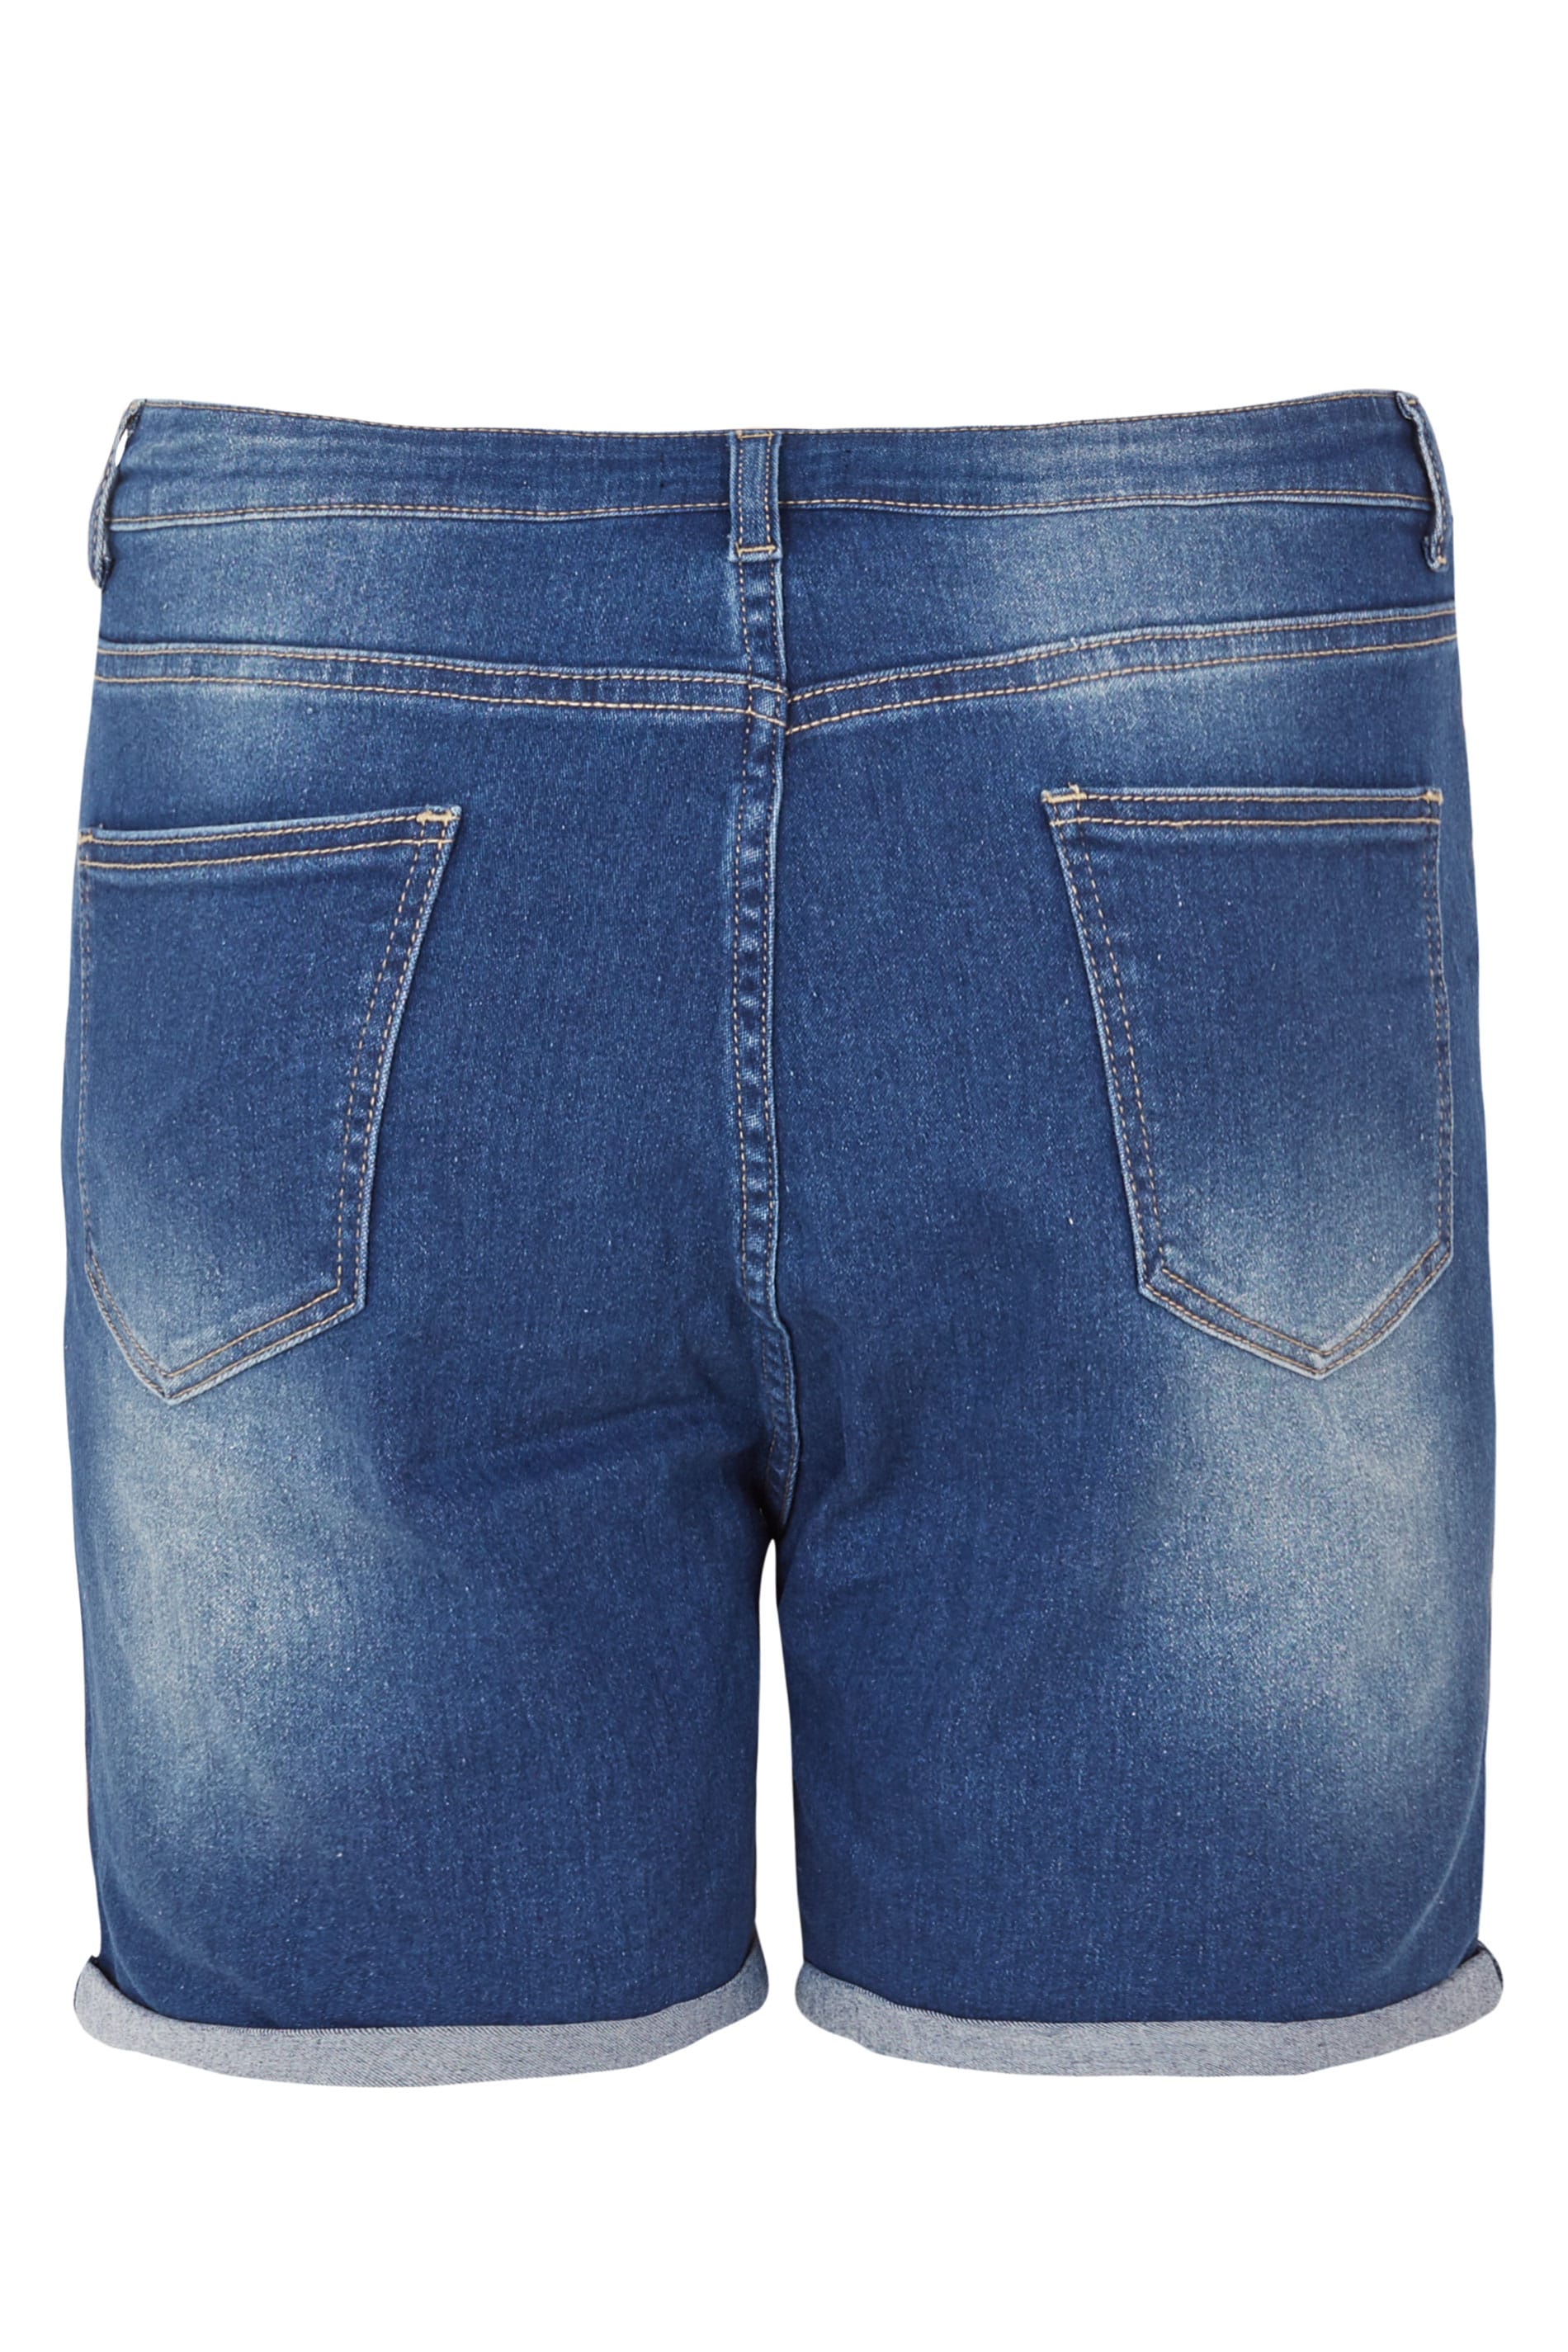 Indigo Blue Denim Ripped Shorts, Plus size 16 to 36